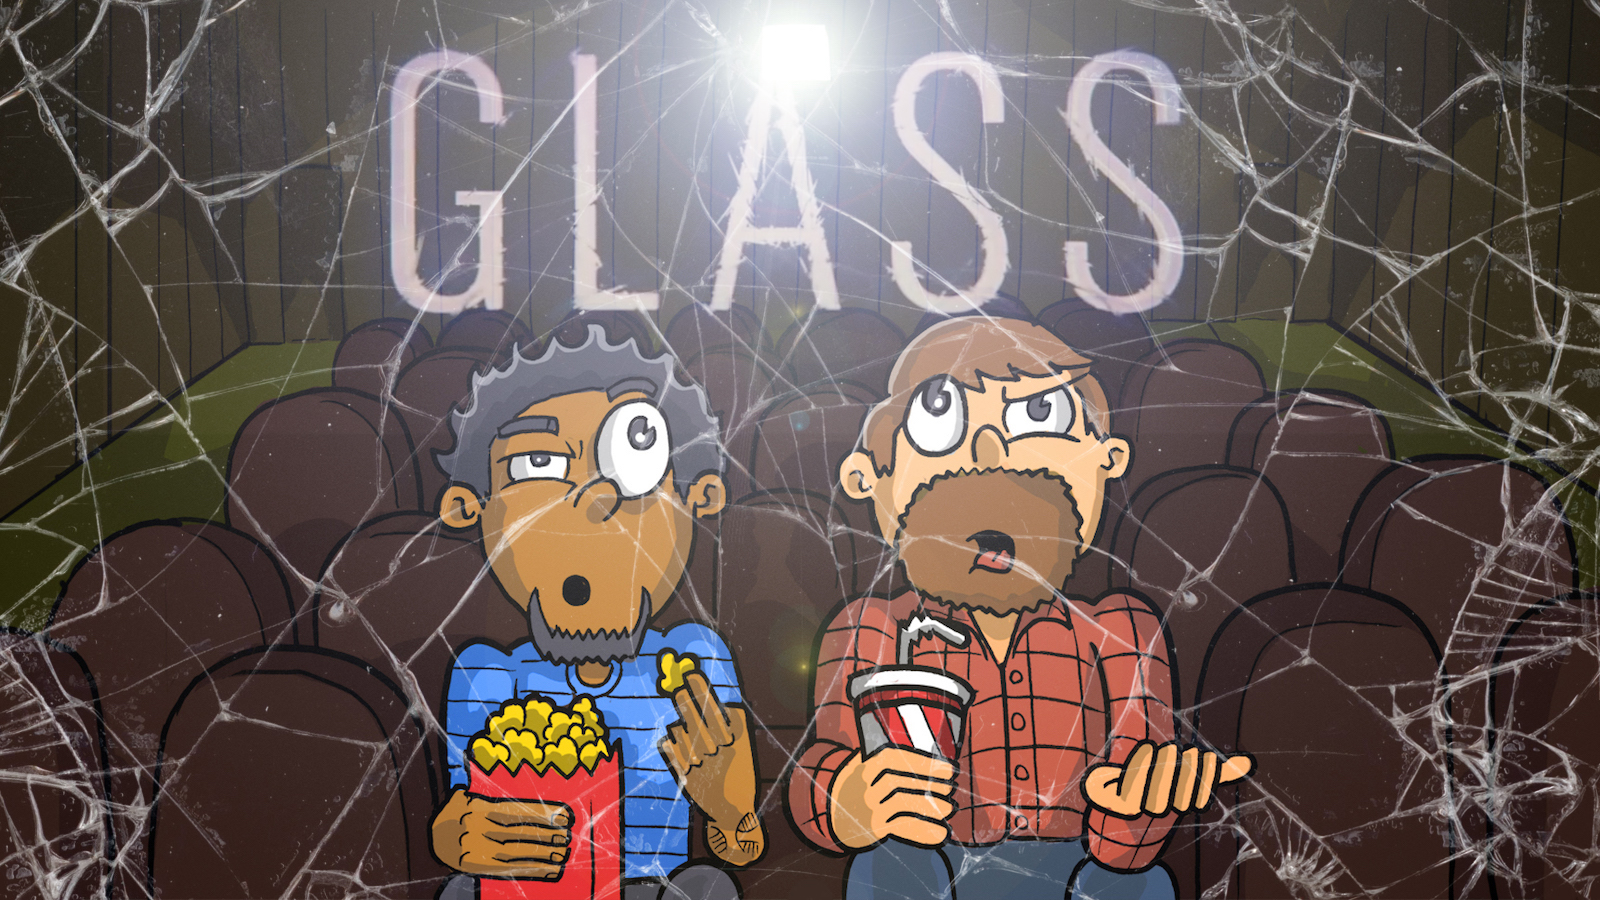 Glass Podcast Wide